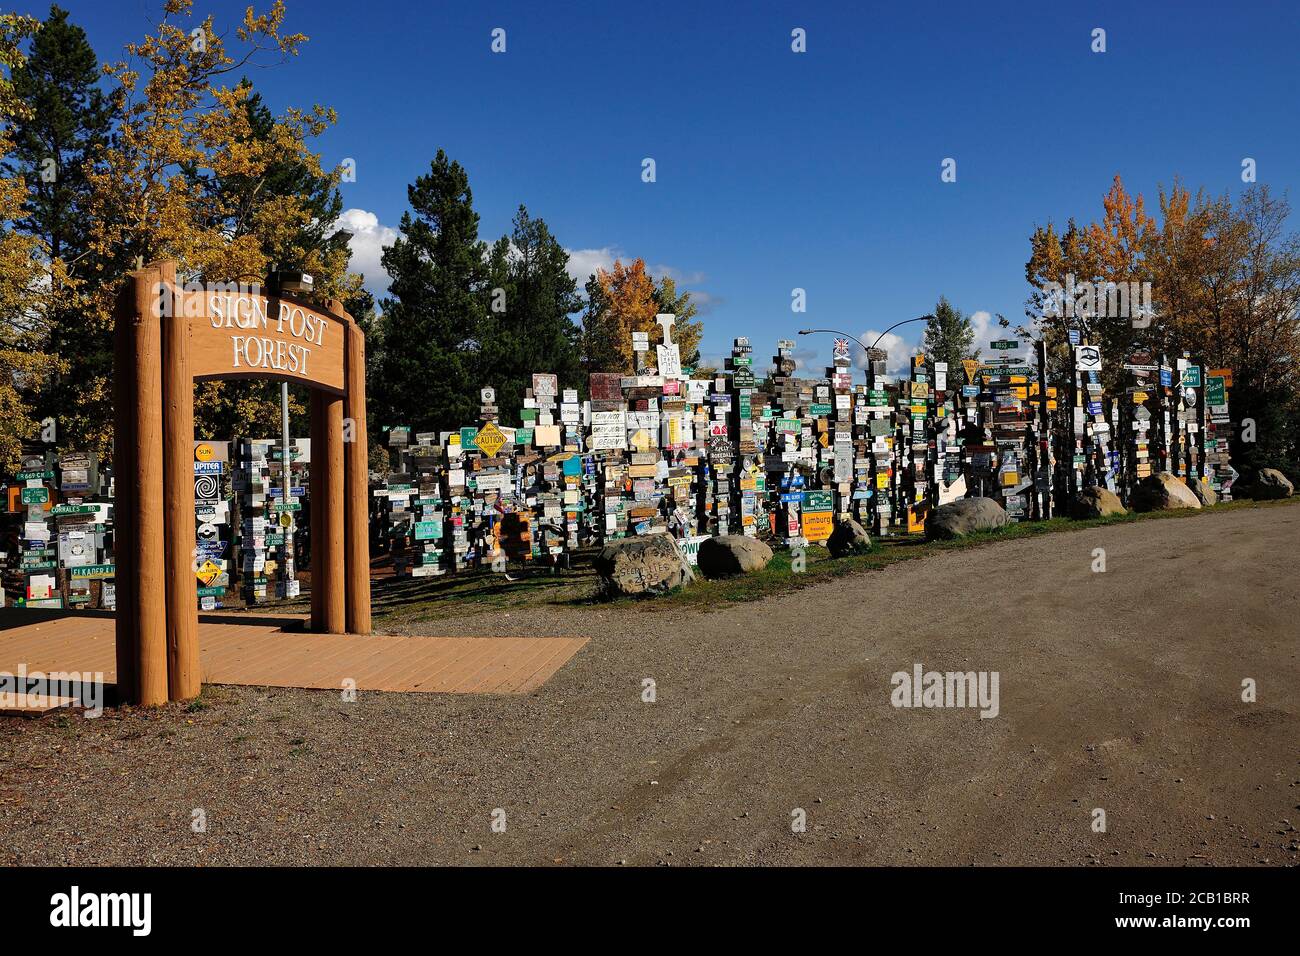 Sign Post Forest, Watson Lake, Yukon Territorium, Kanada Stockfoto